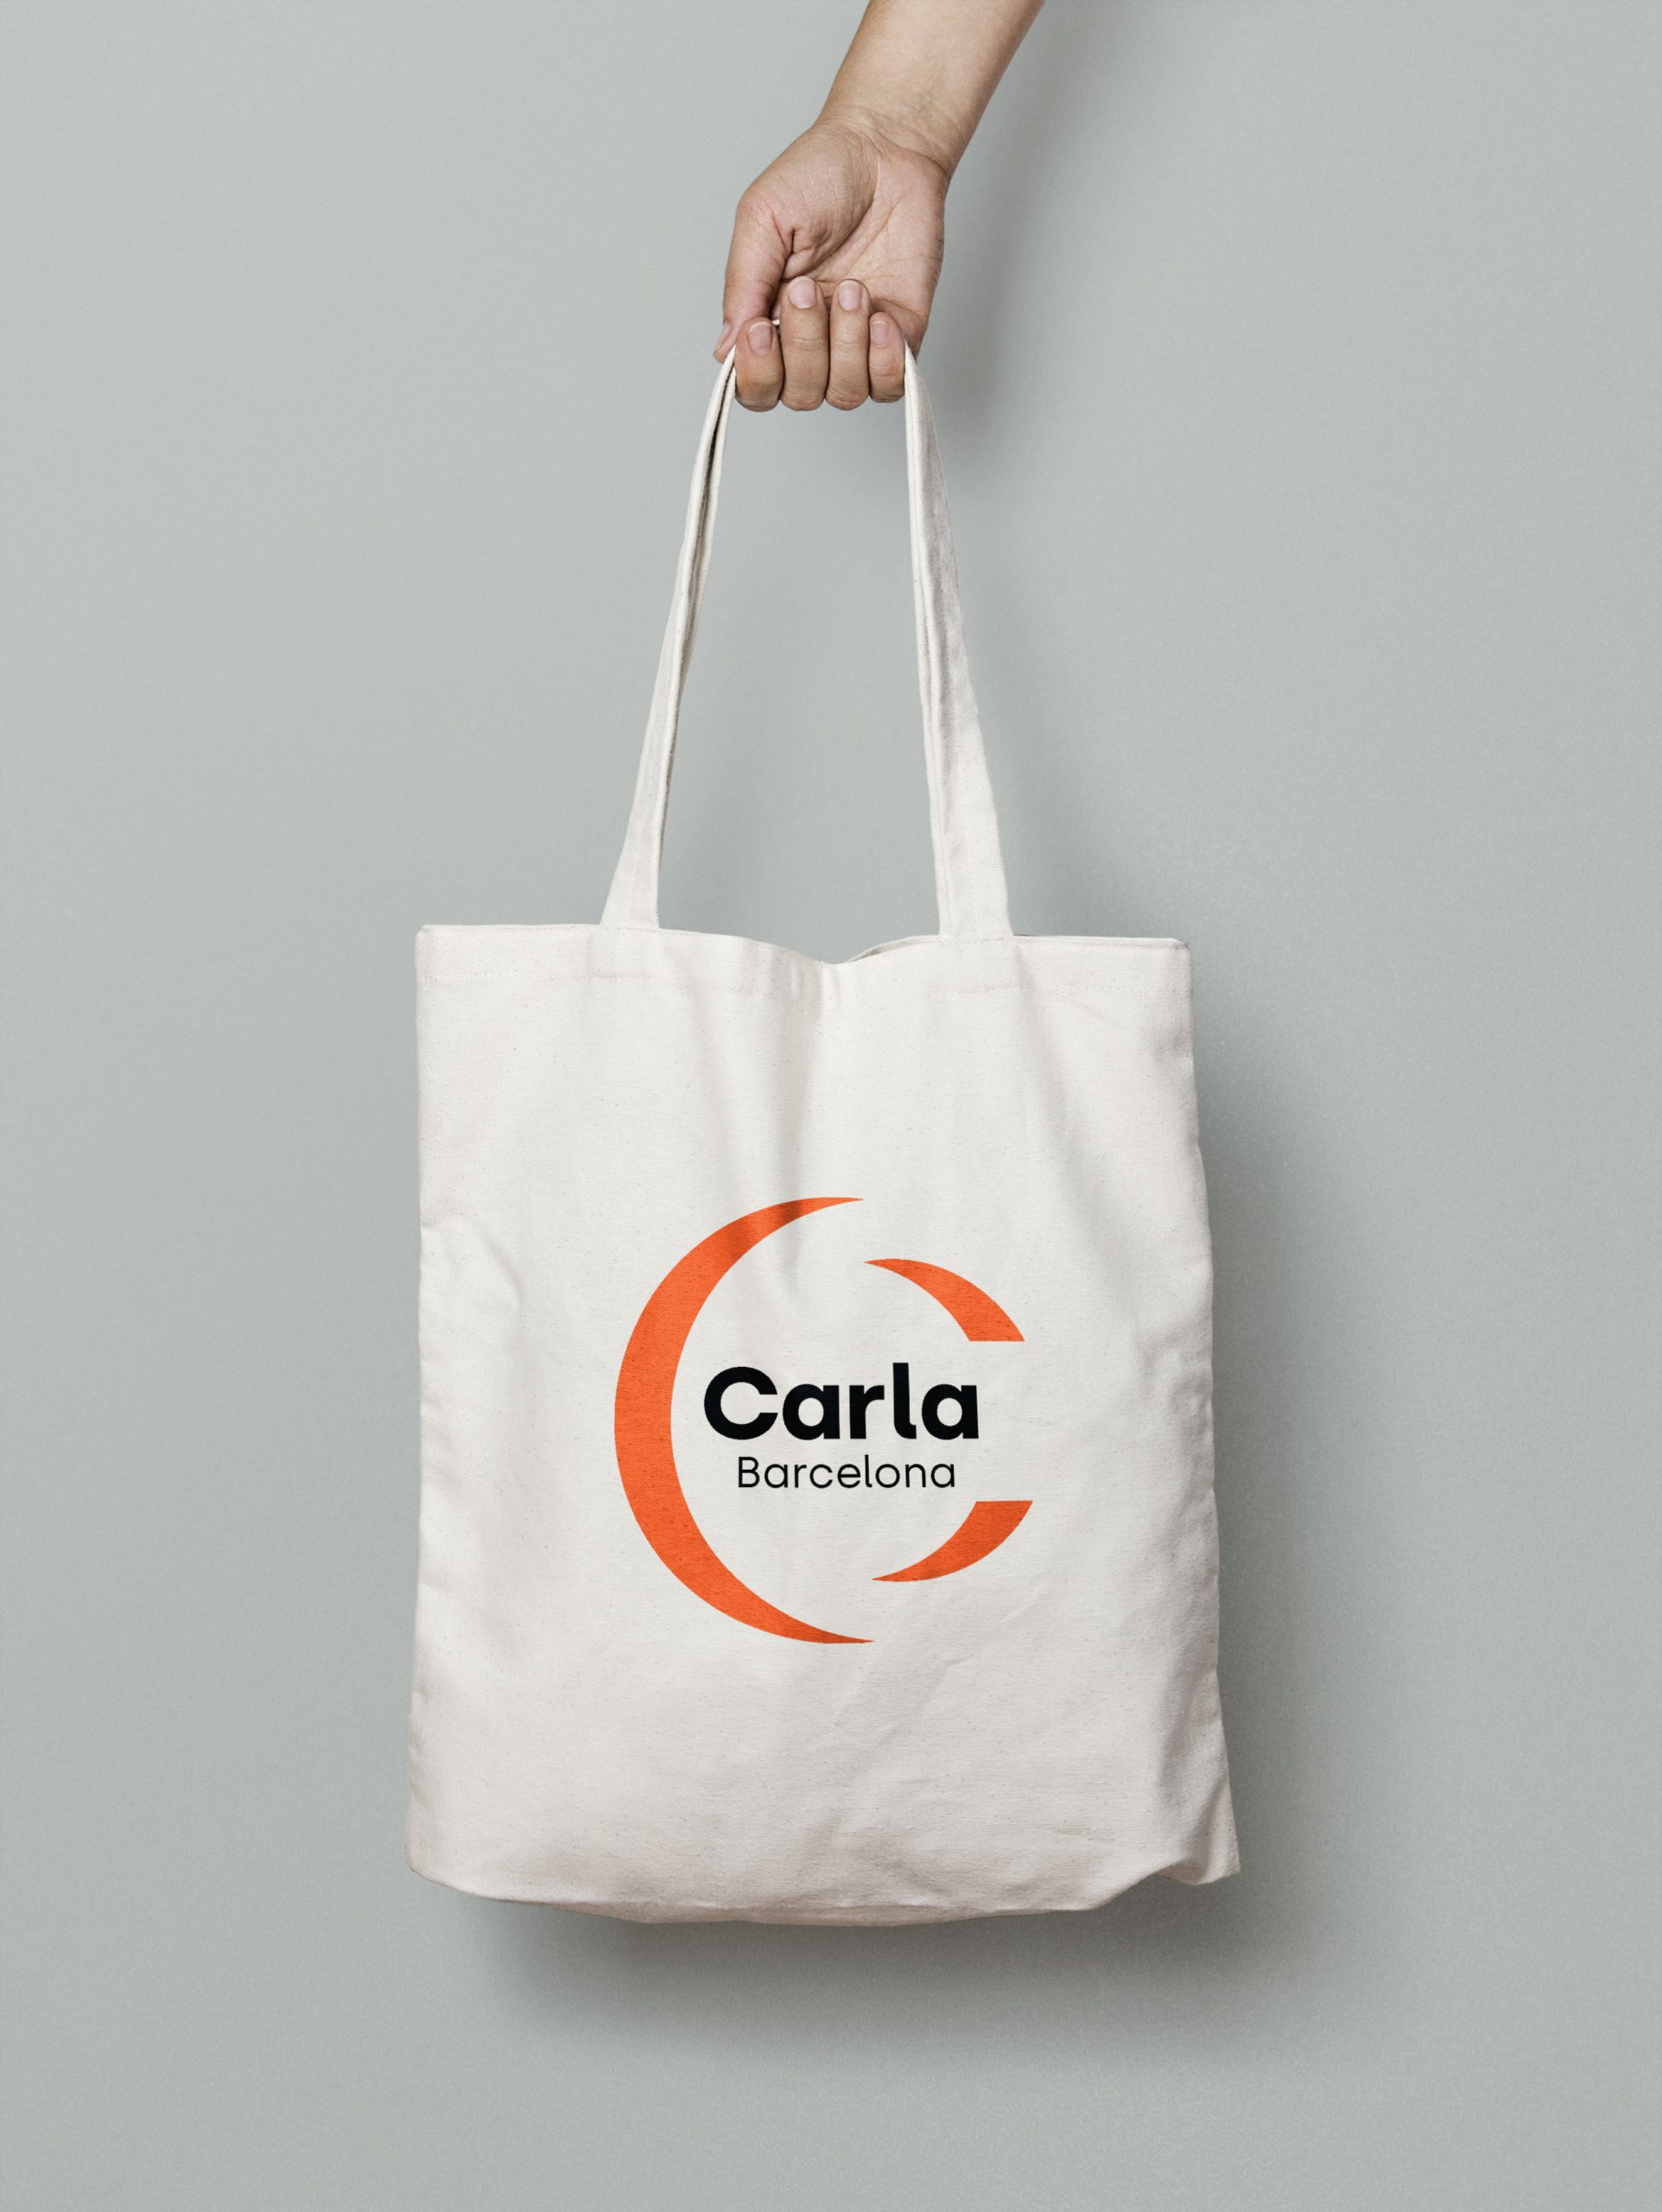 Carla-tote-bag-Barcelona-Daniel-Cavalcanti.jpeg